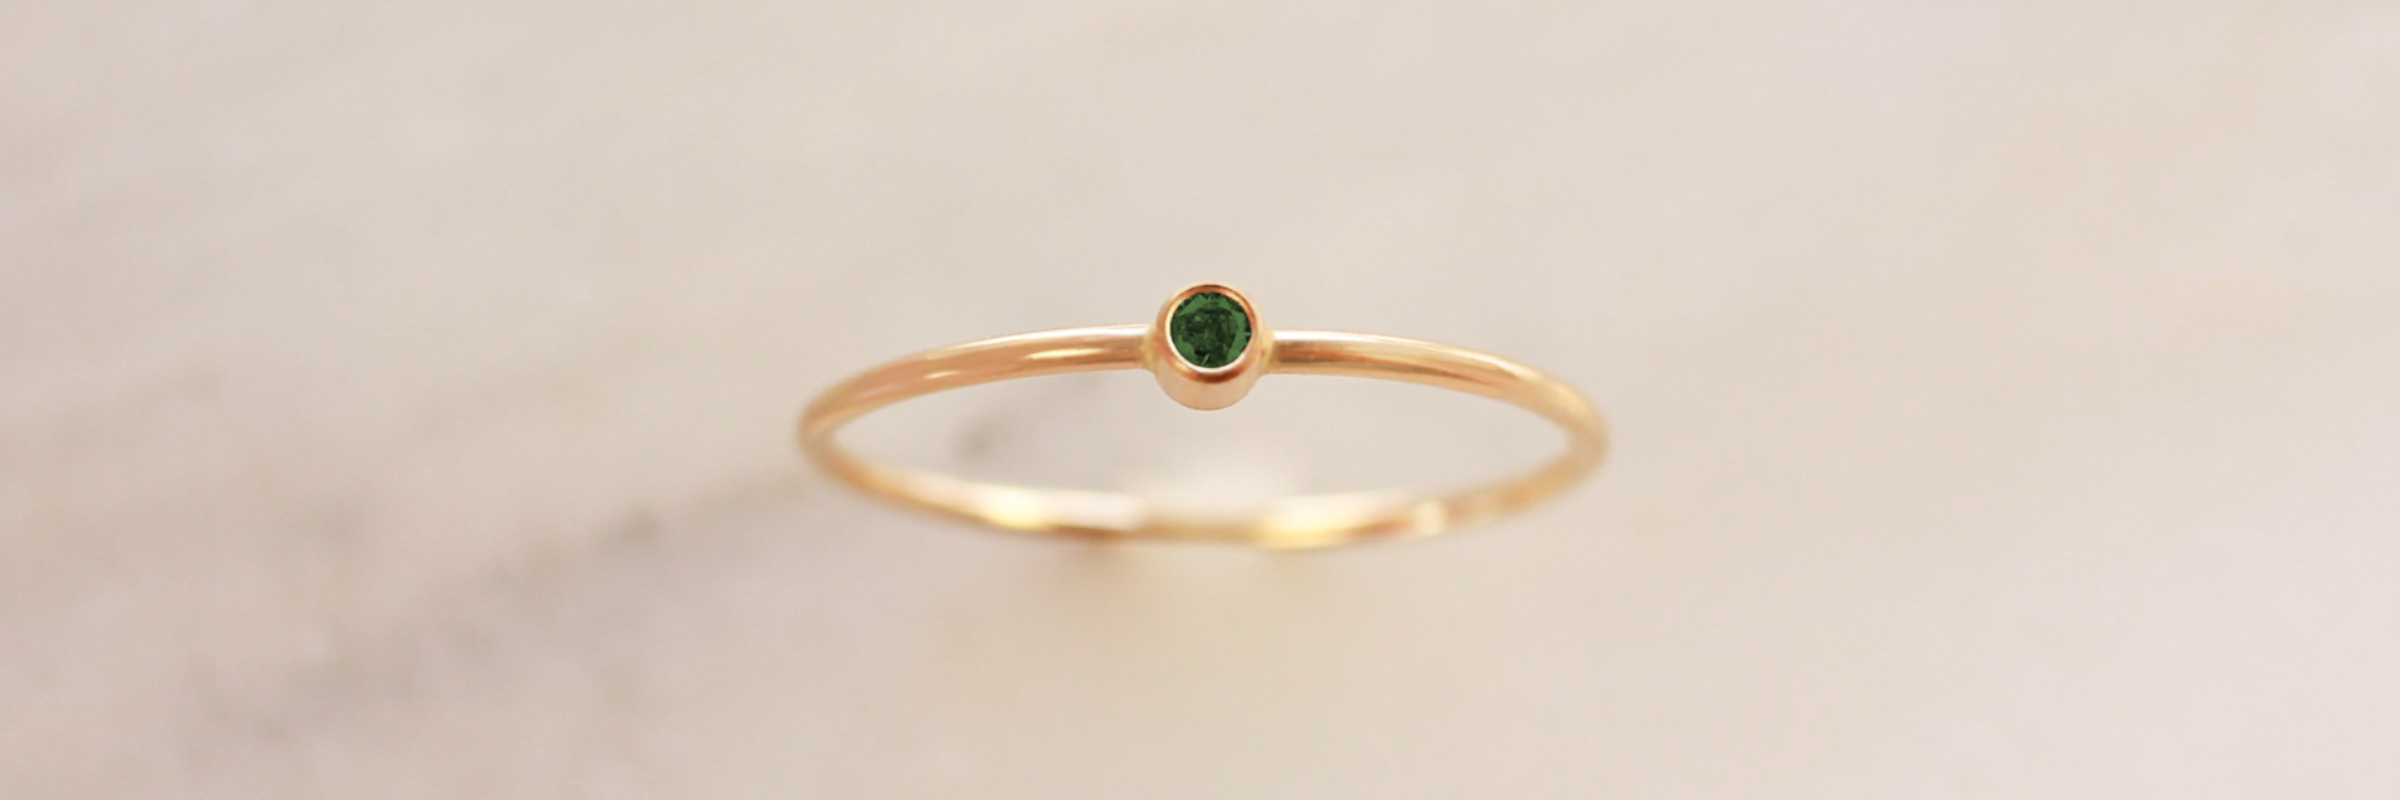 NOLIA Jewelry • Tiny May Birthstone Ring • Emerald